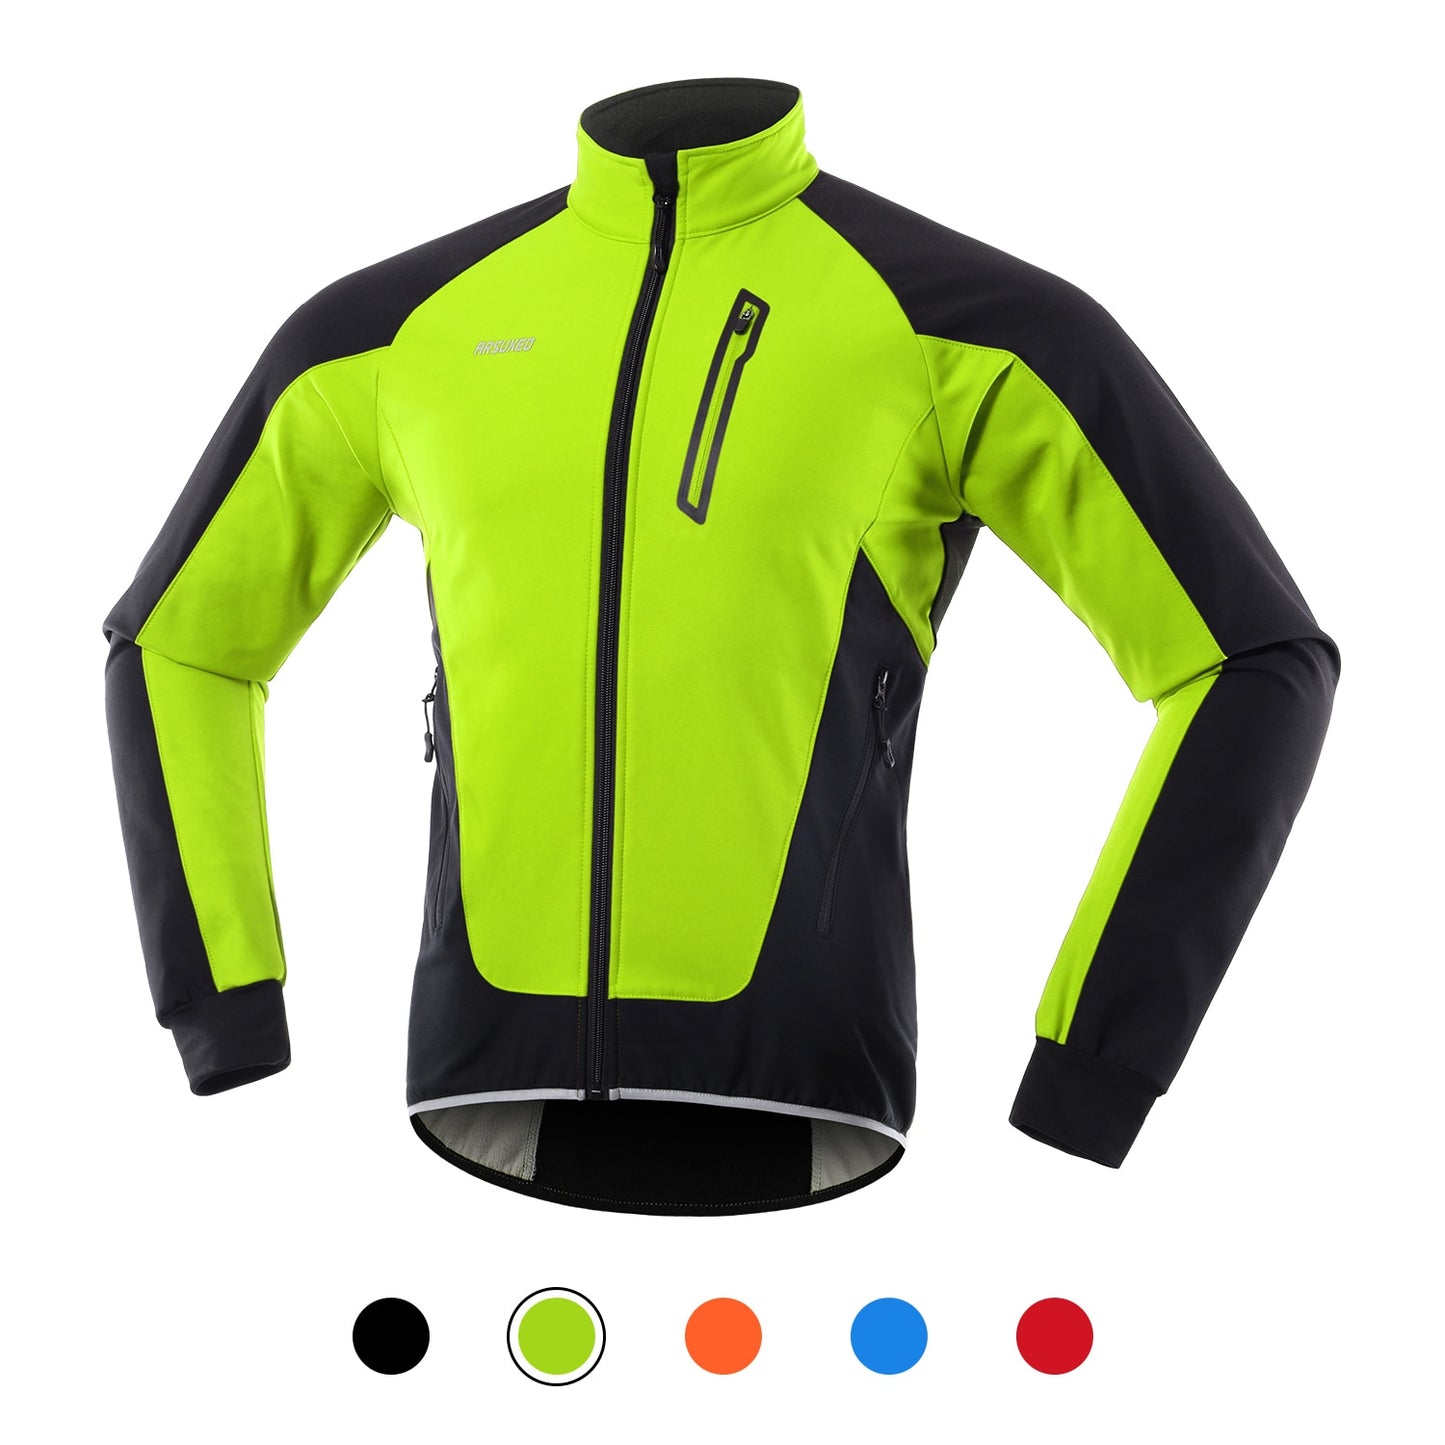 ARSUXEO Hi-Viz Men's Winter Waterproof/Windproof Thermal Fleece-lined Cycling Jacket - Reflective/Yellow-Green/Black